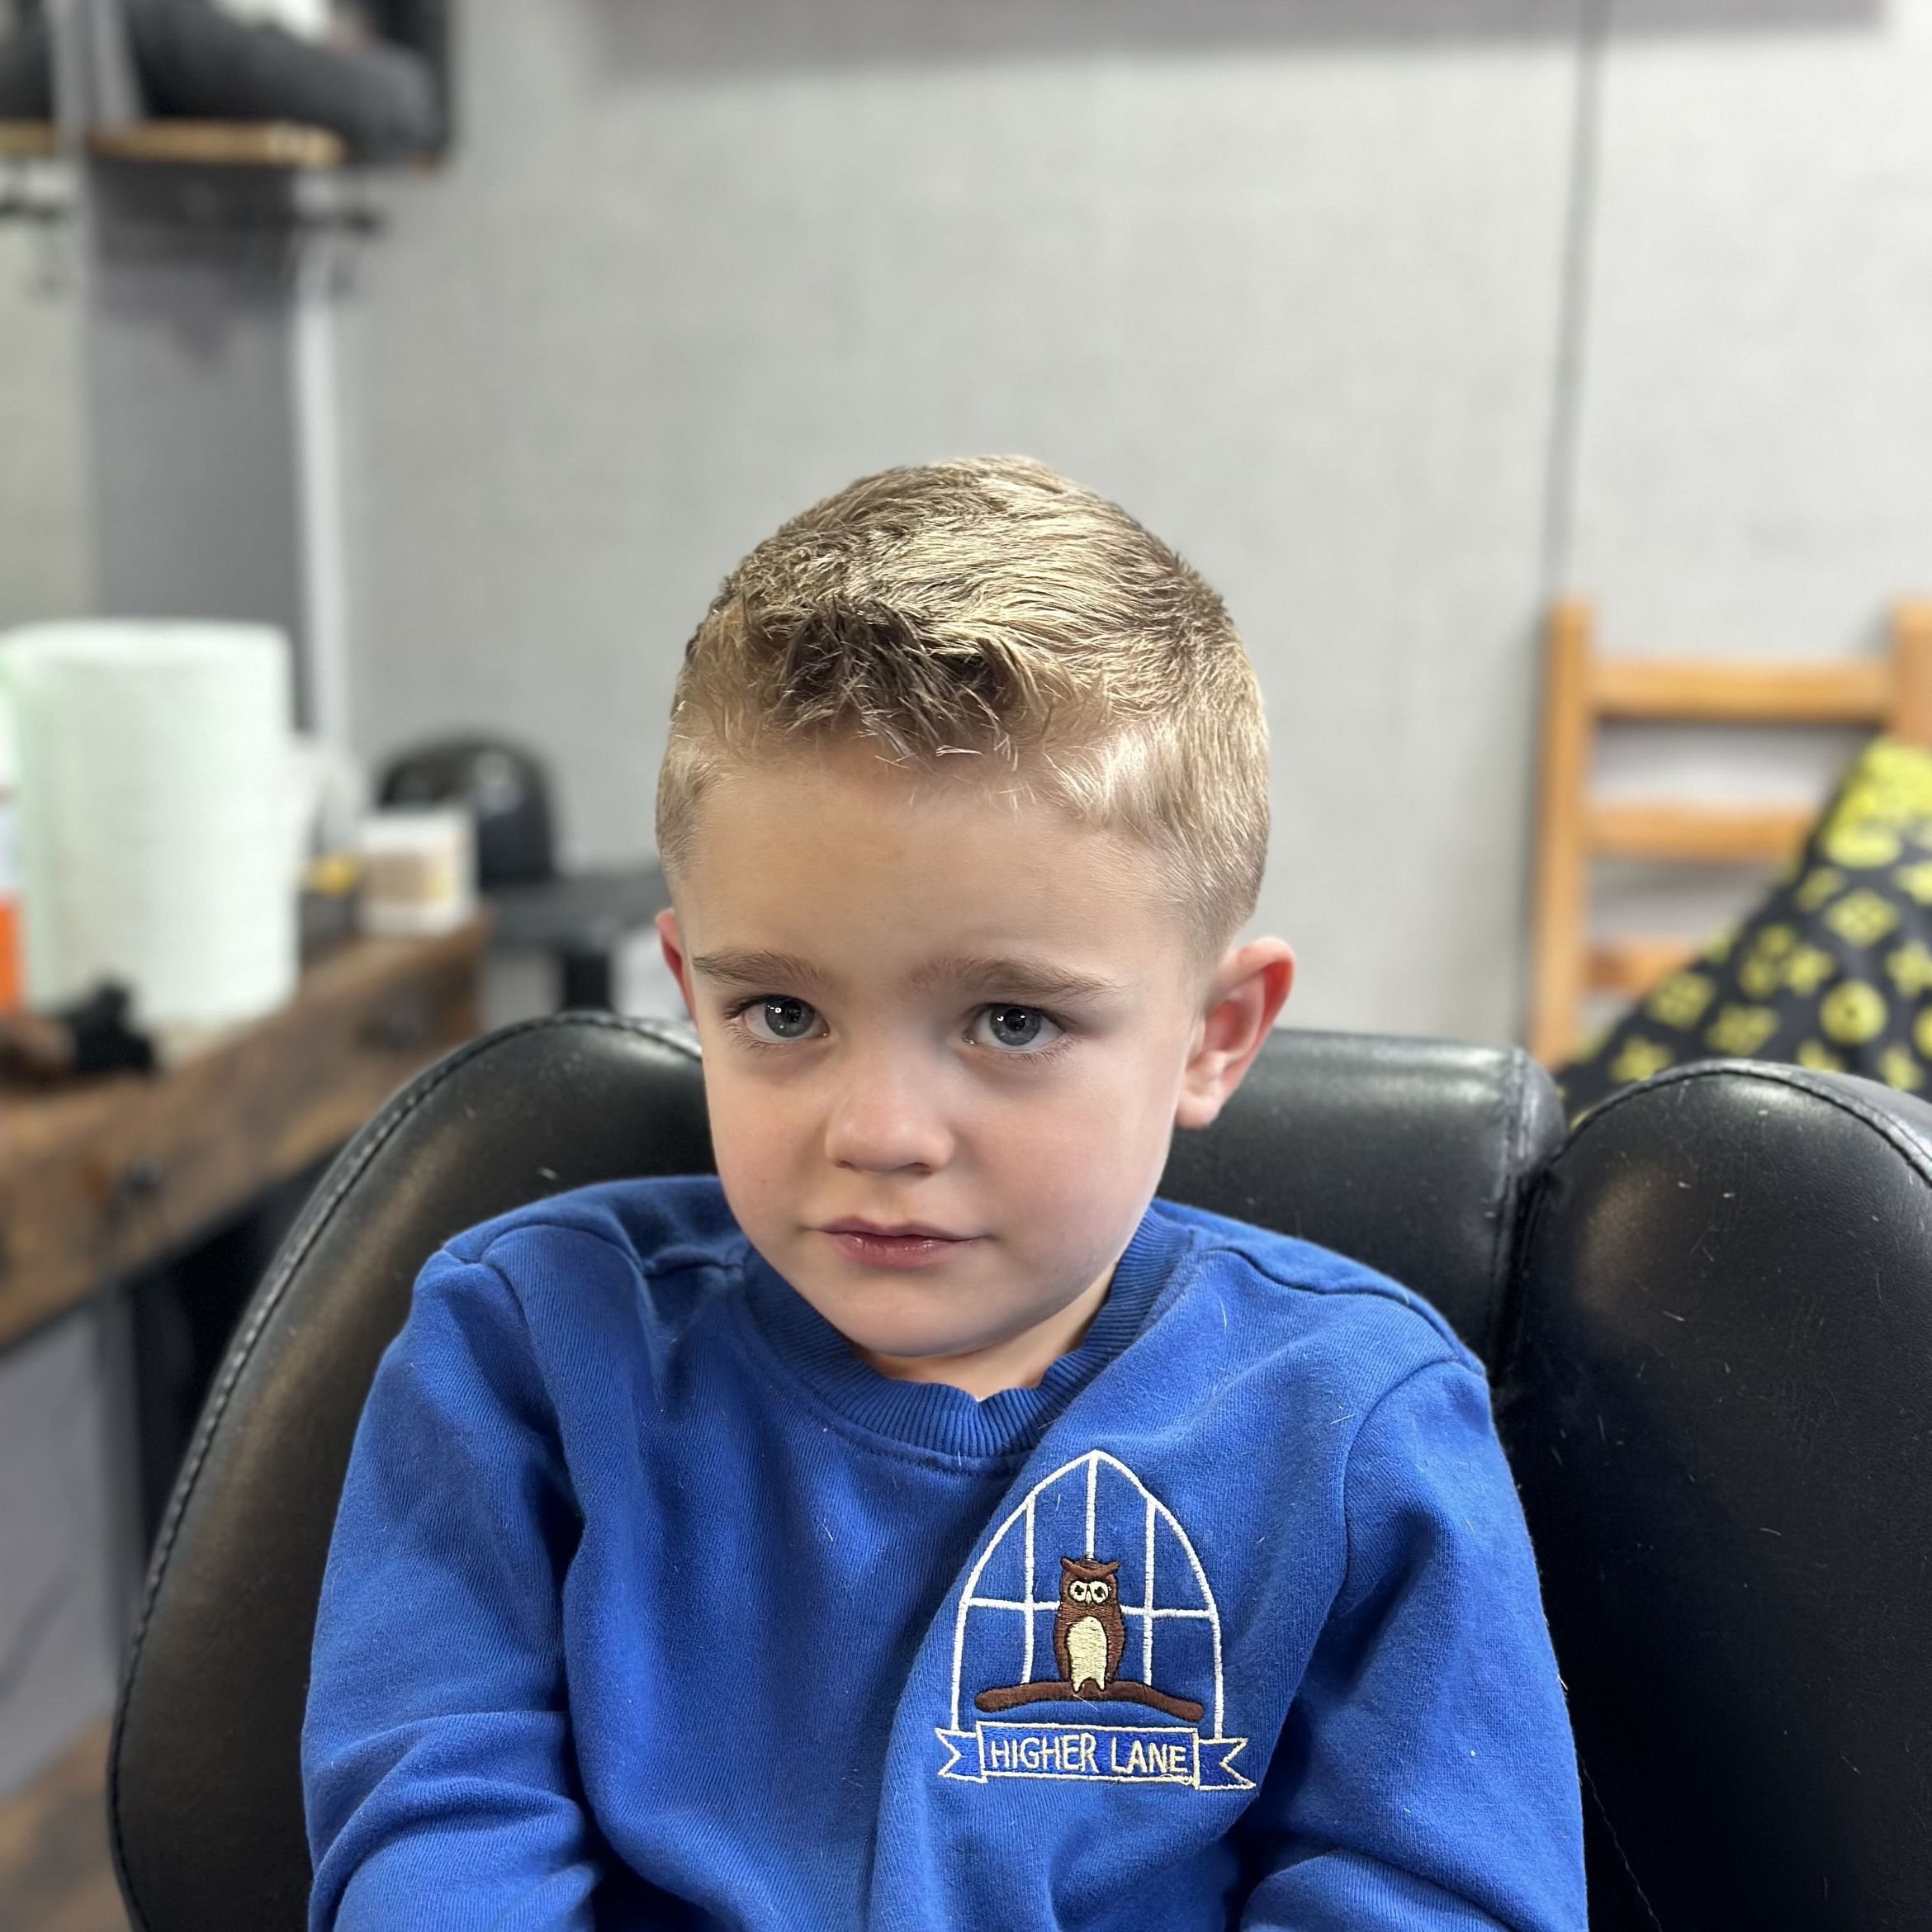 kids Haircut under 12 portfolio